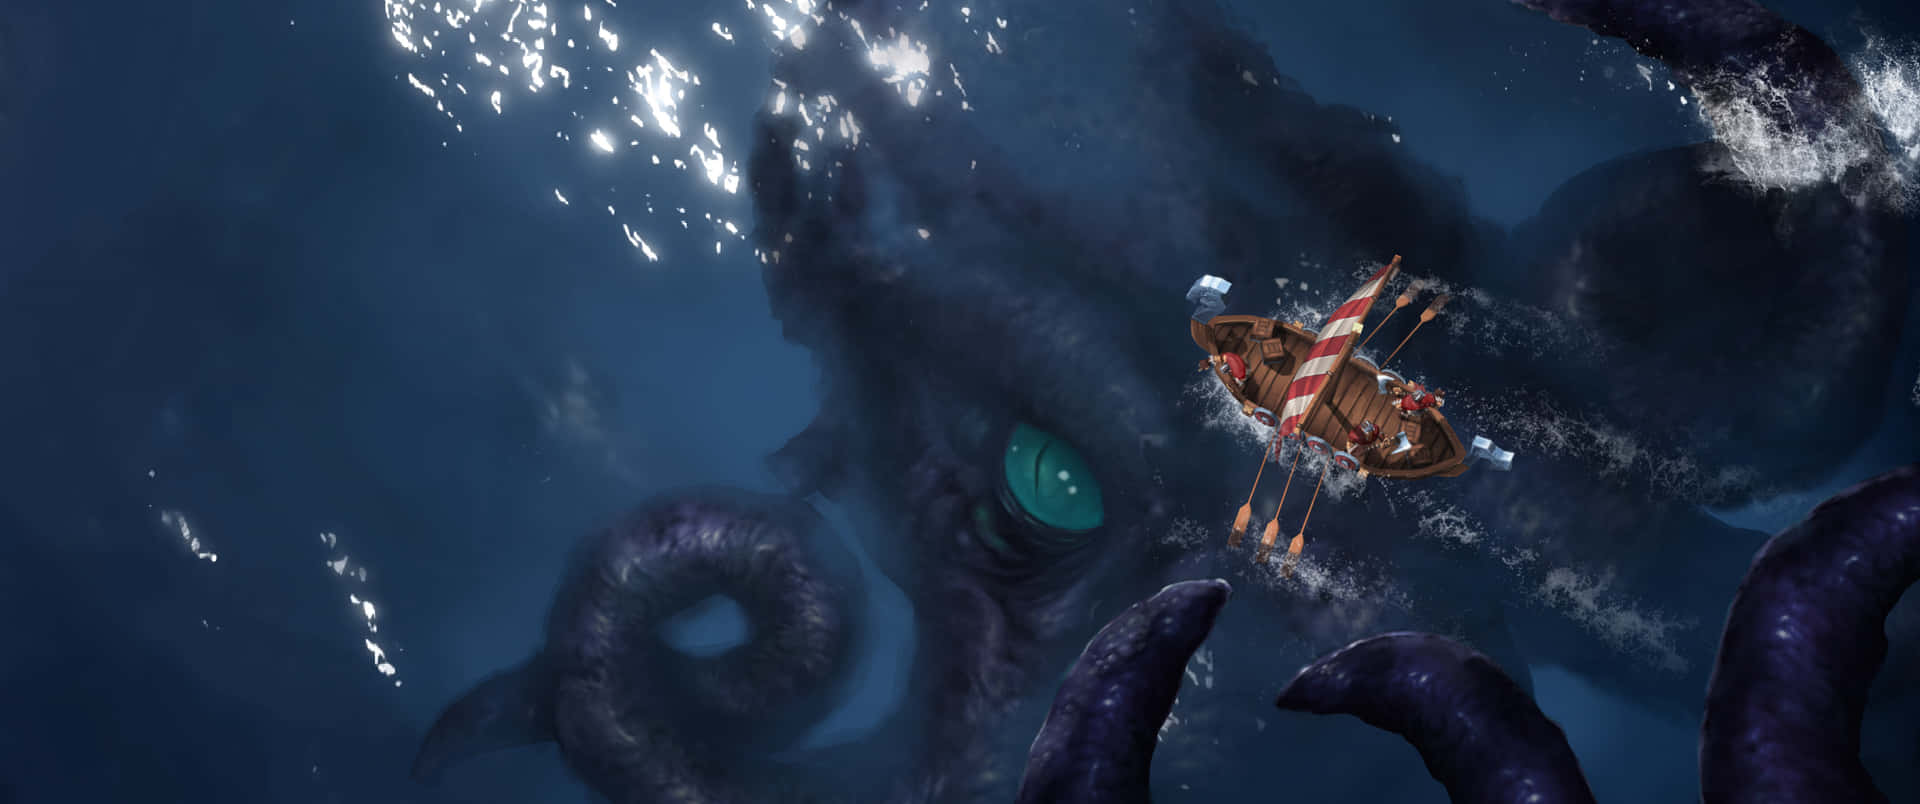 3440x1440p Assassin's Creed Odyssey Background Kraken Under The Ship Background